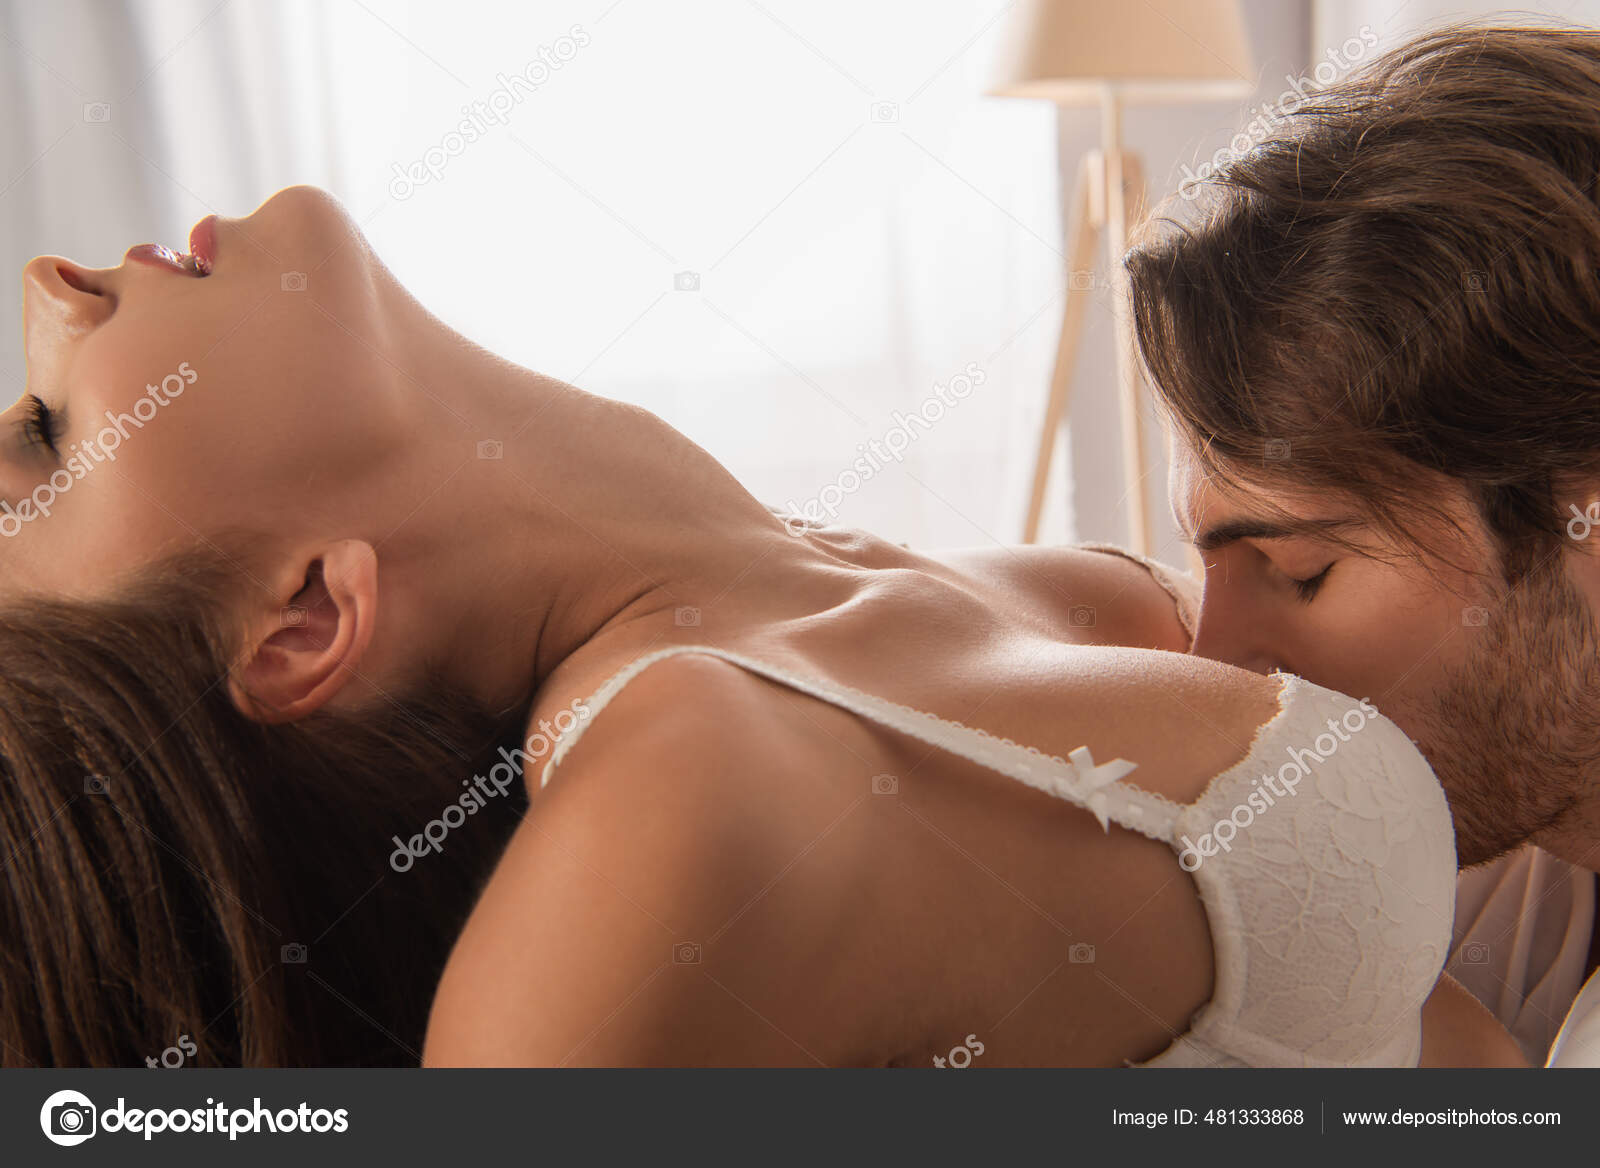 Hot kiss in boobs